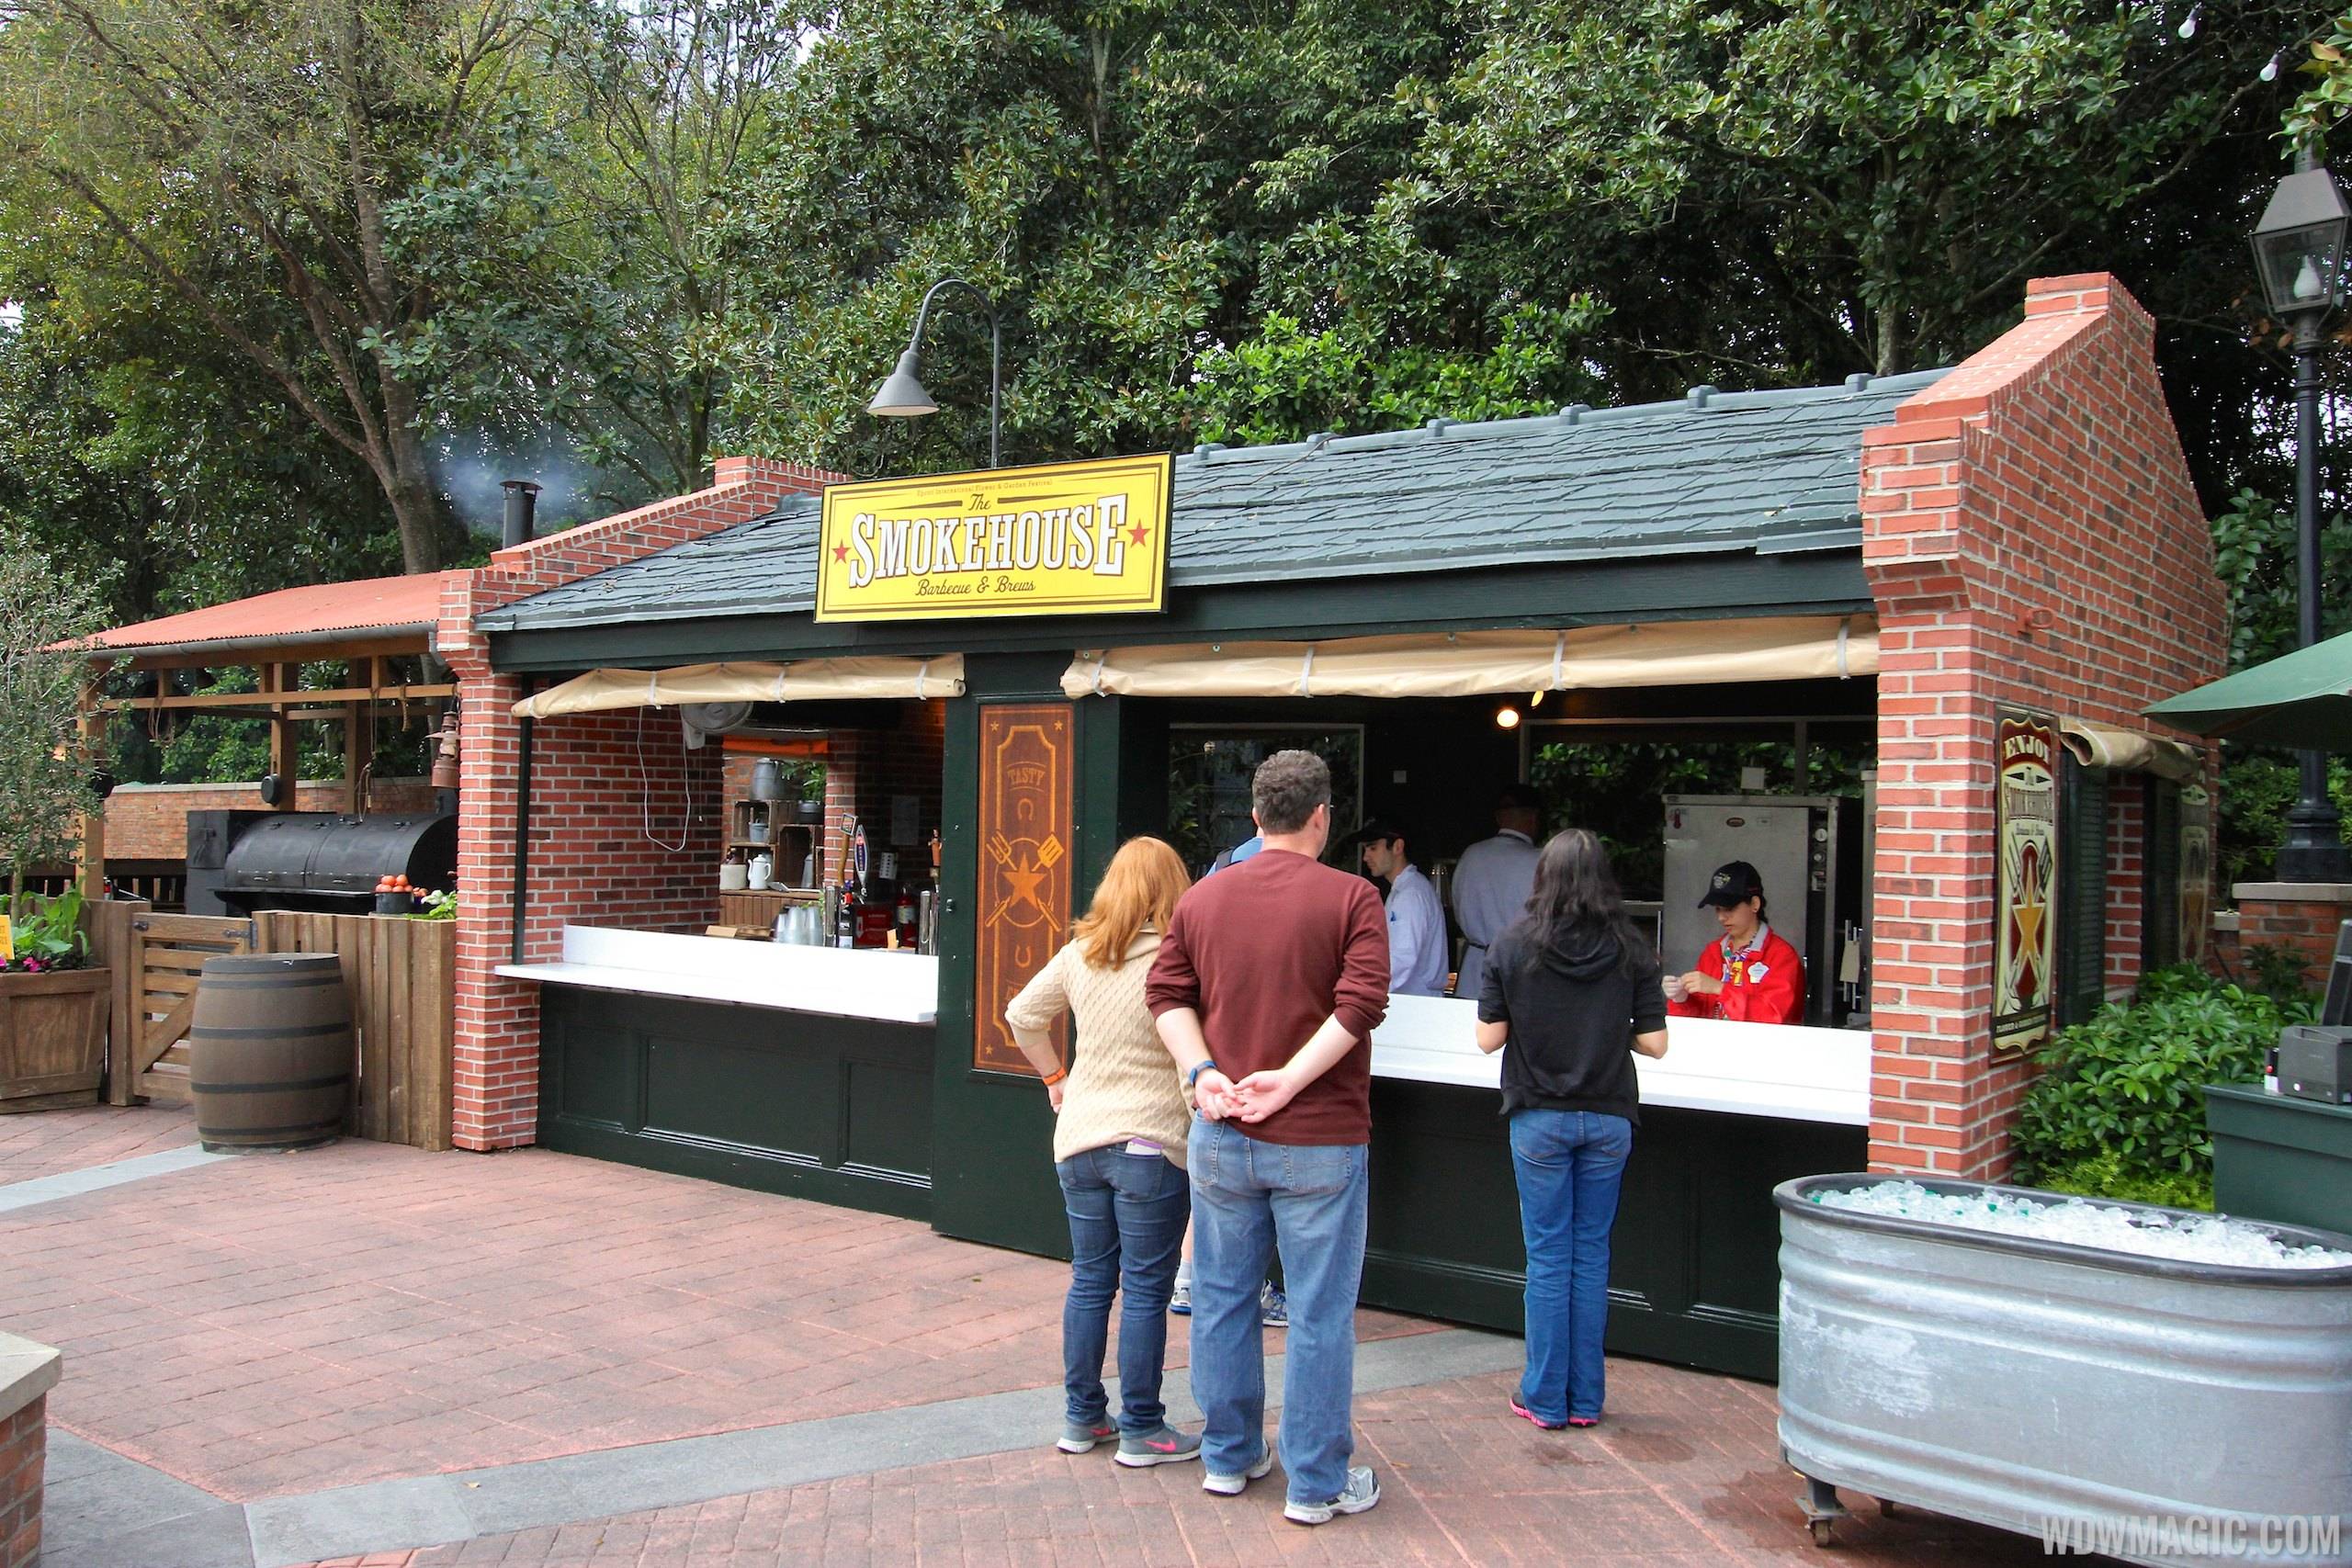 2014 Epcot Flower and Garden Festival Outdoor Kitchen kiosks - The Smokehouse kiosk